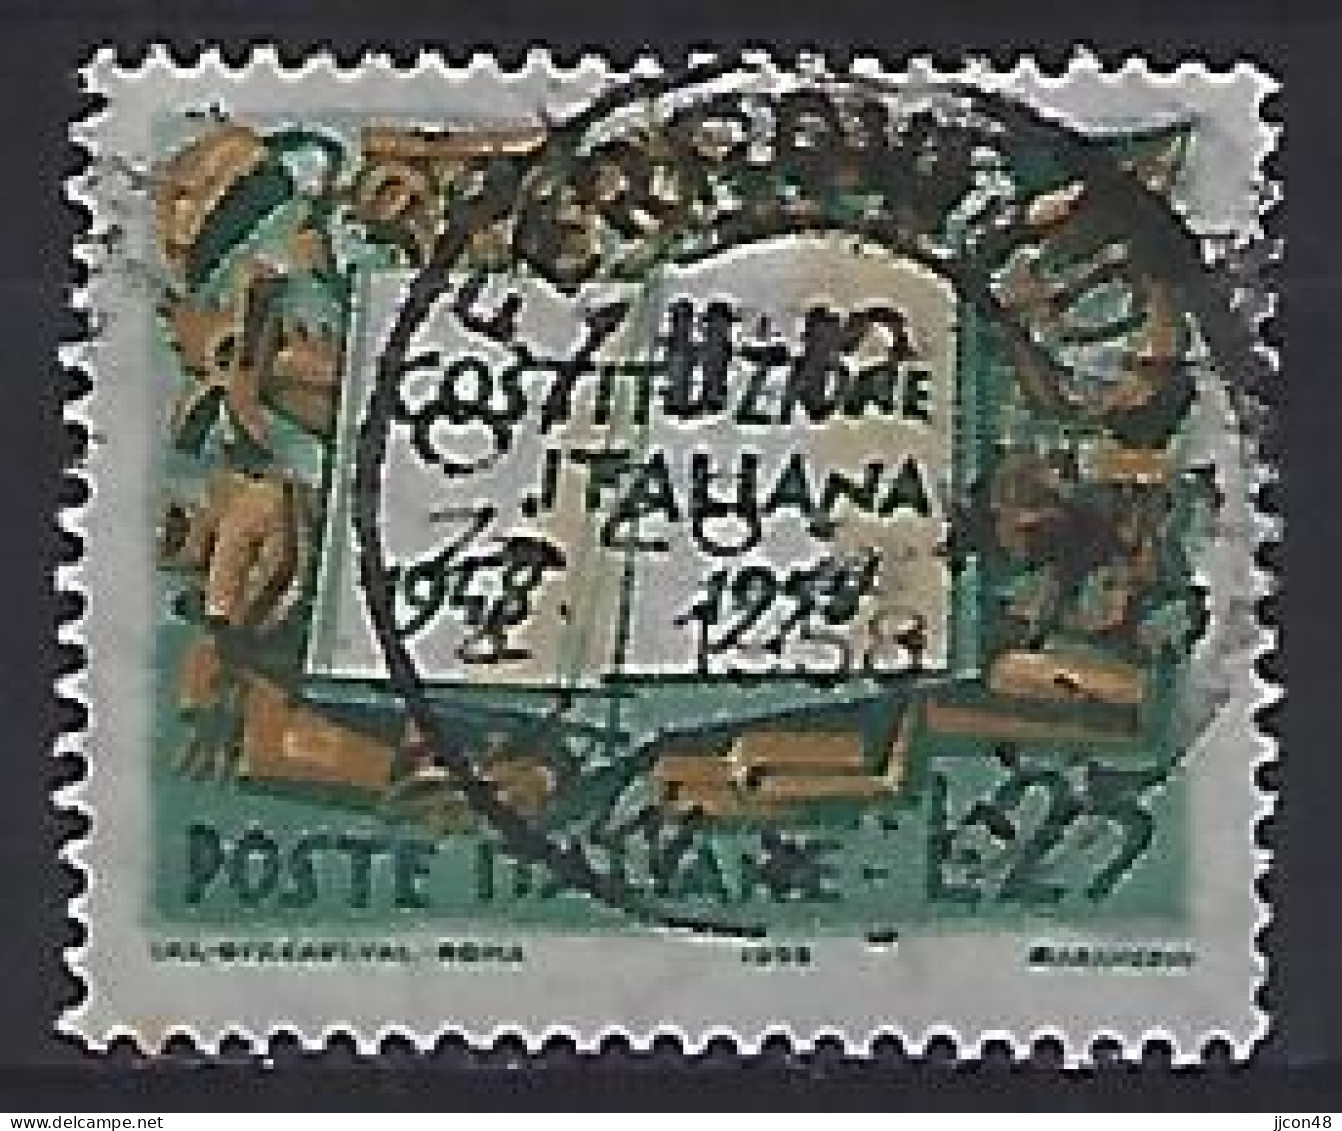 Italy 1958  10 Jahre Verfassung  (o) Mi.1007 - 1946-60: Used